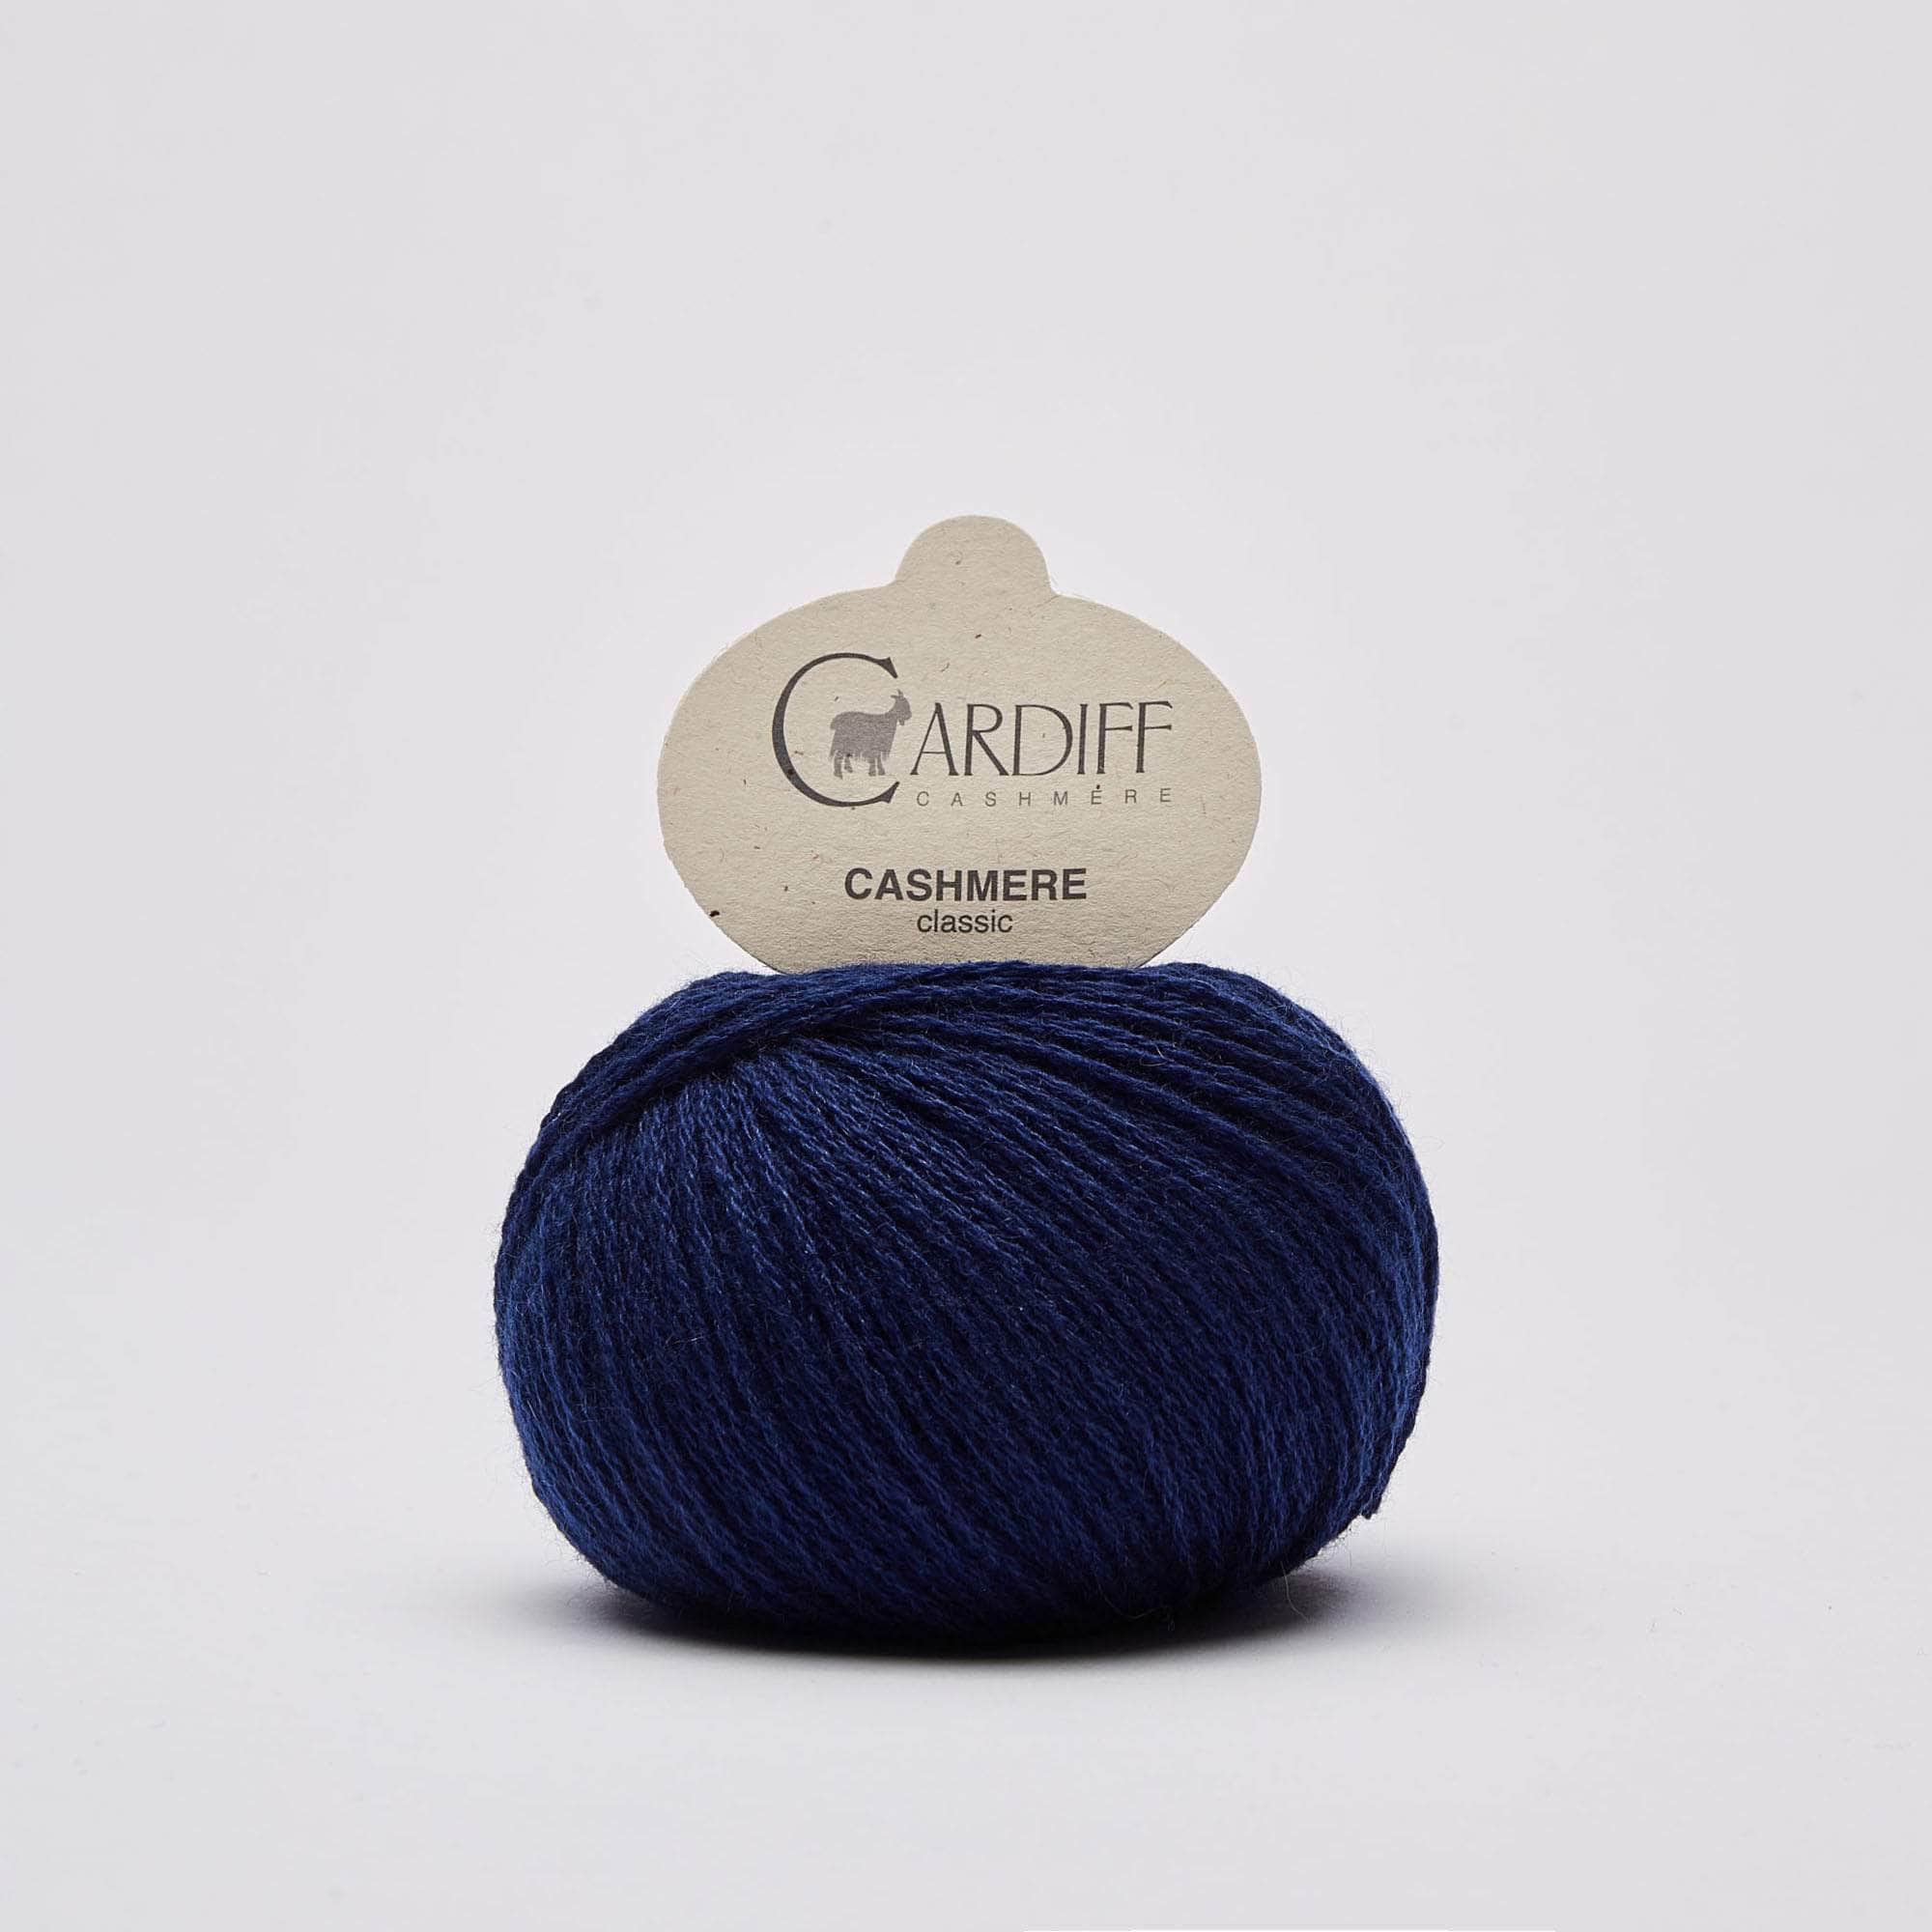 CARDIFF CASHMERE Garn 638 - INDACO Cashmere Classic